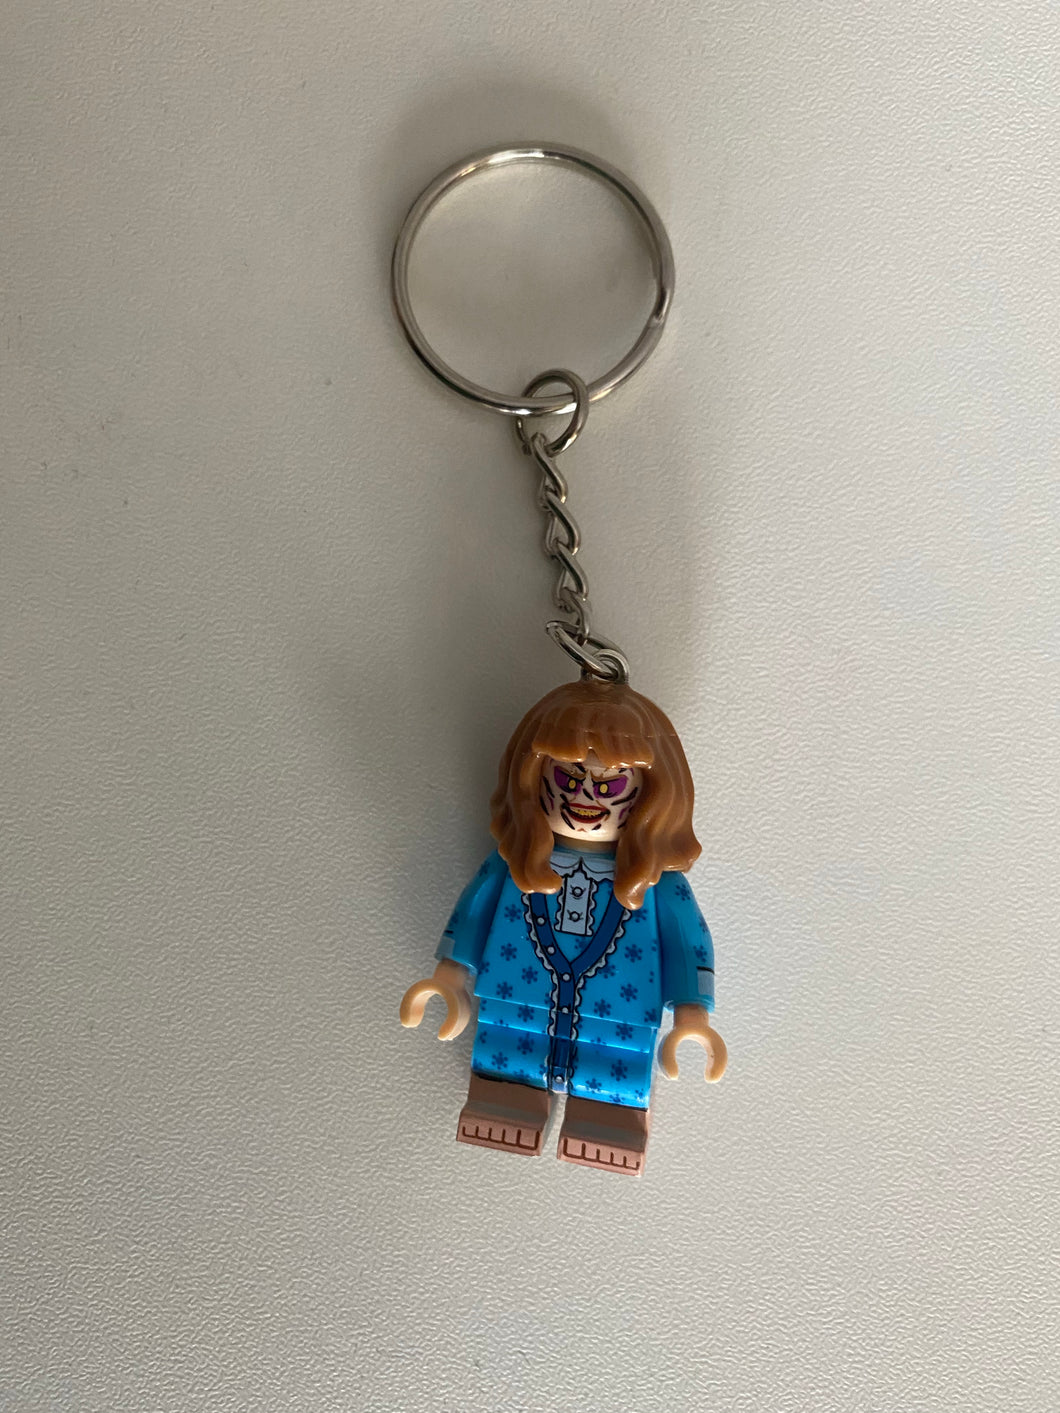 Exorcist Reagan Lego Keychains